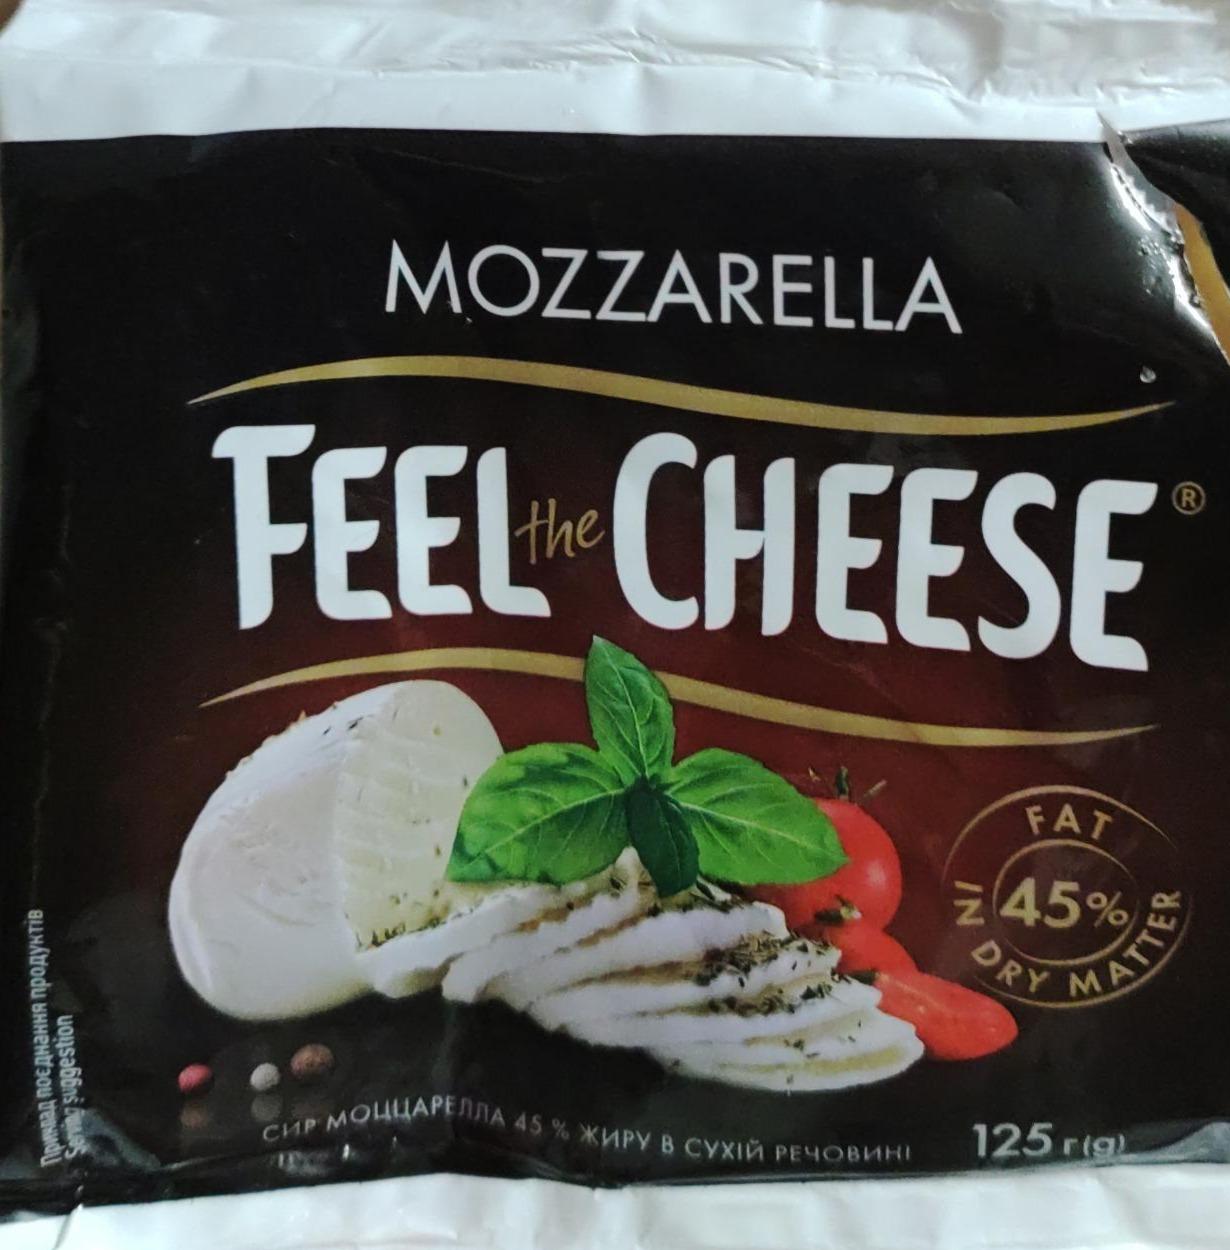 Фото - Feel the cheese Mozzarella